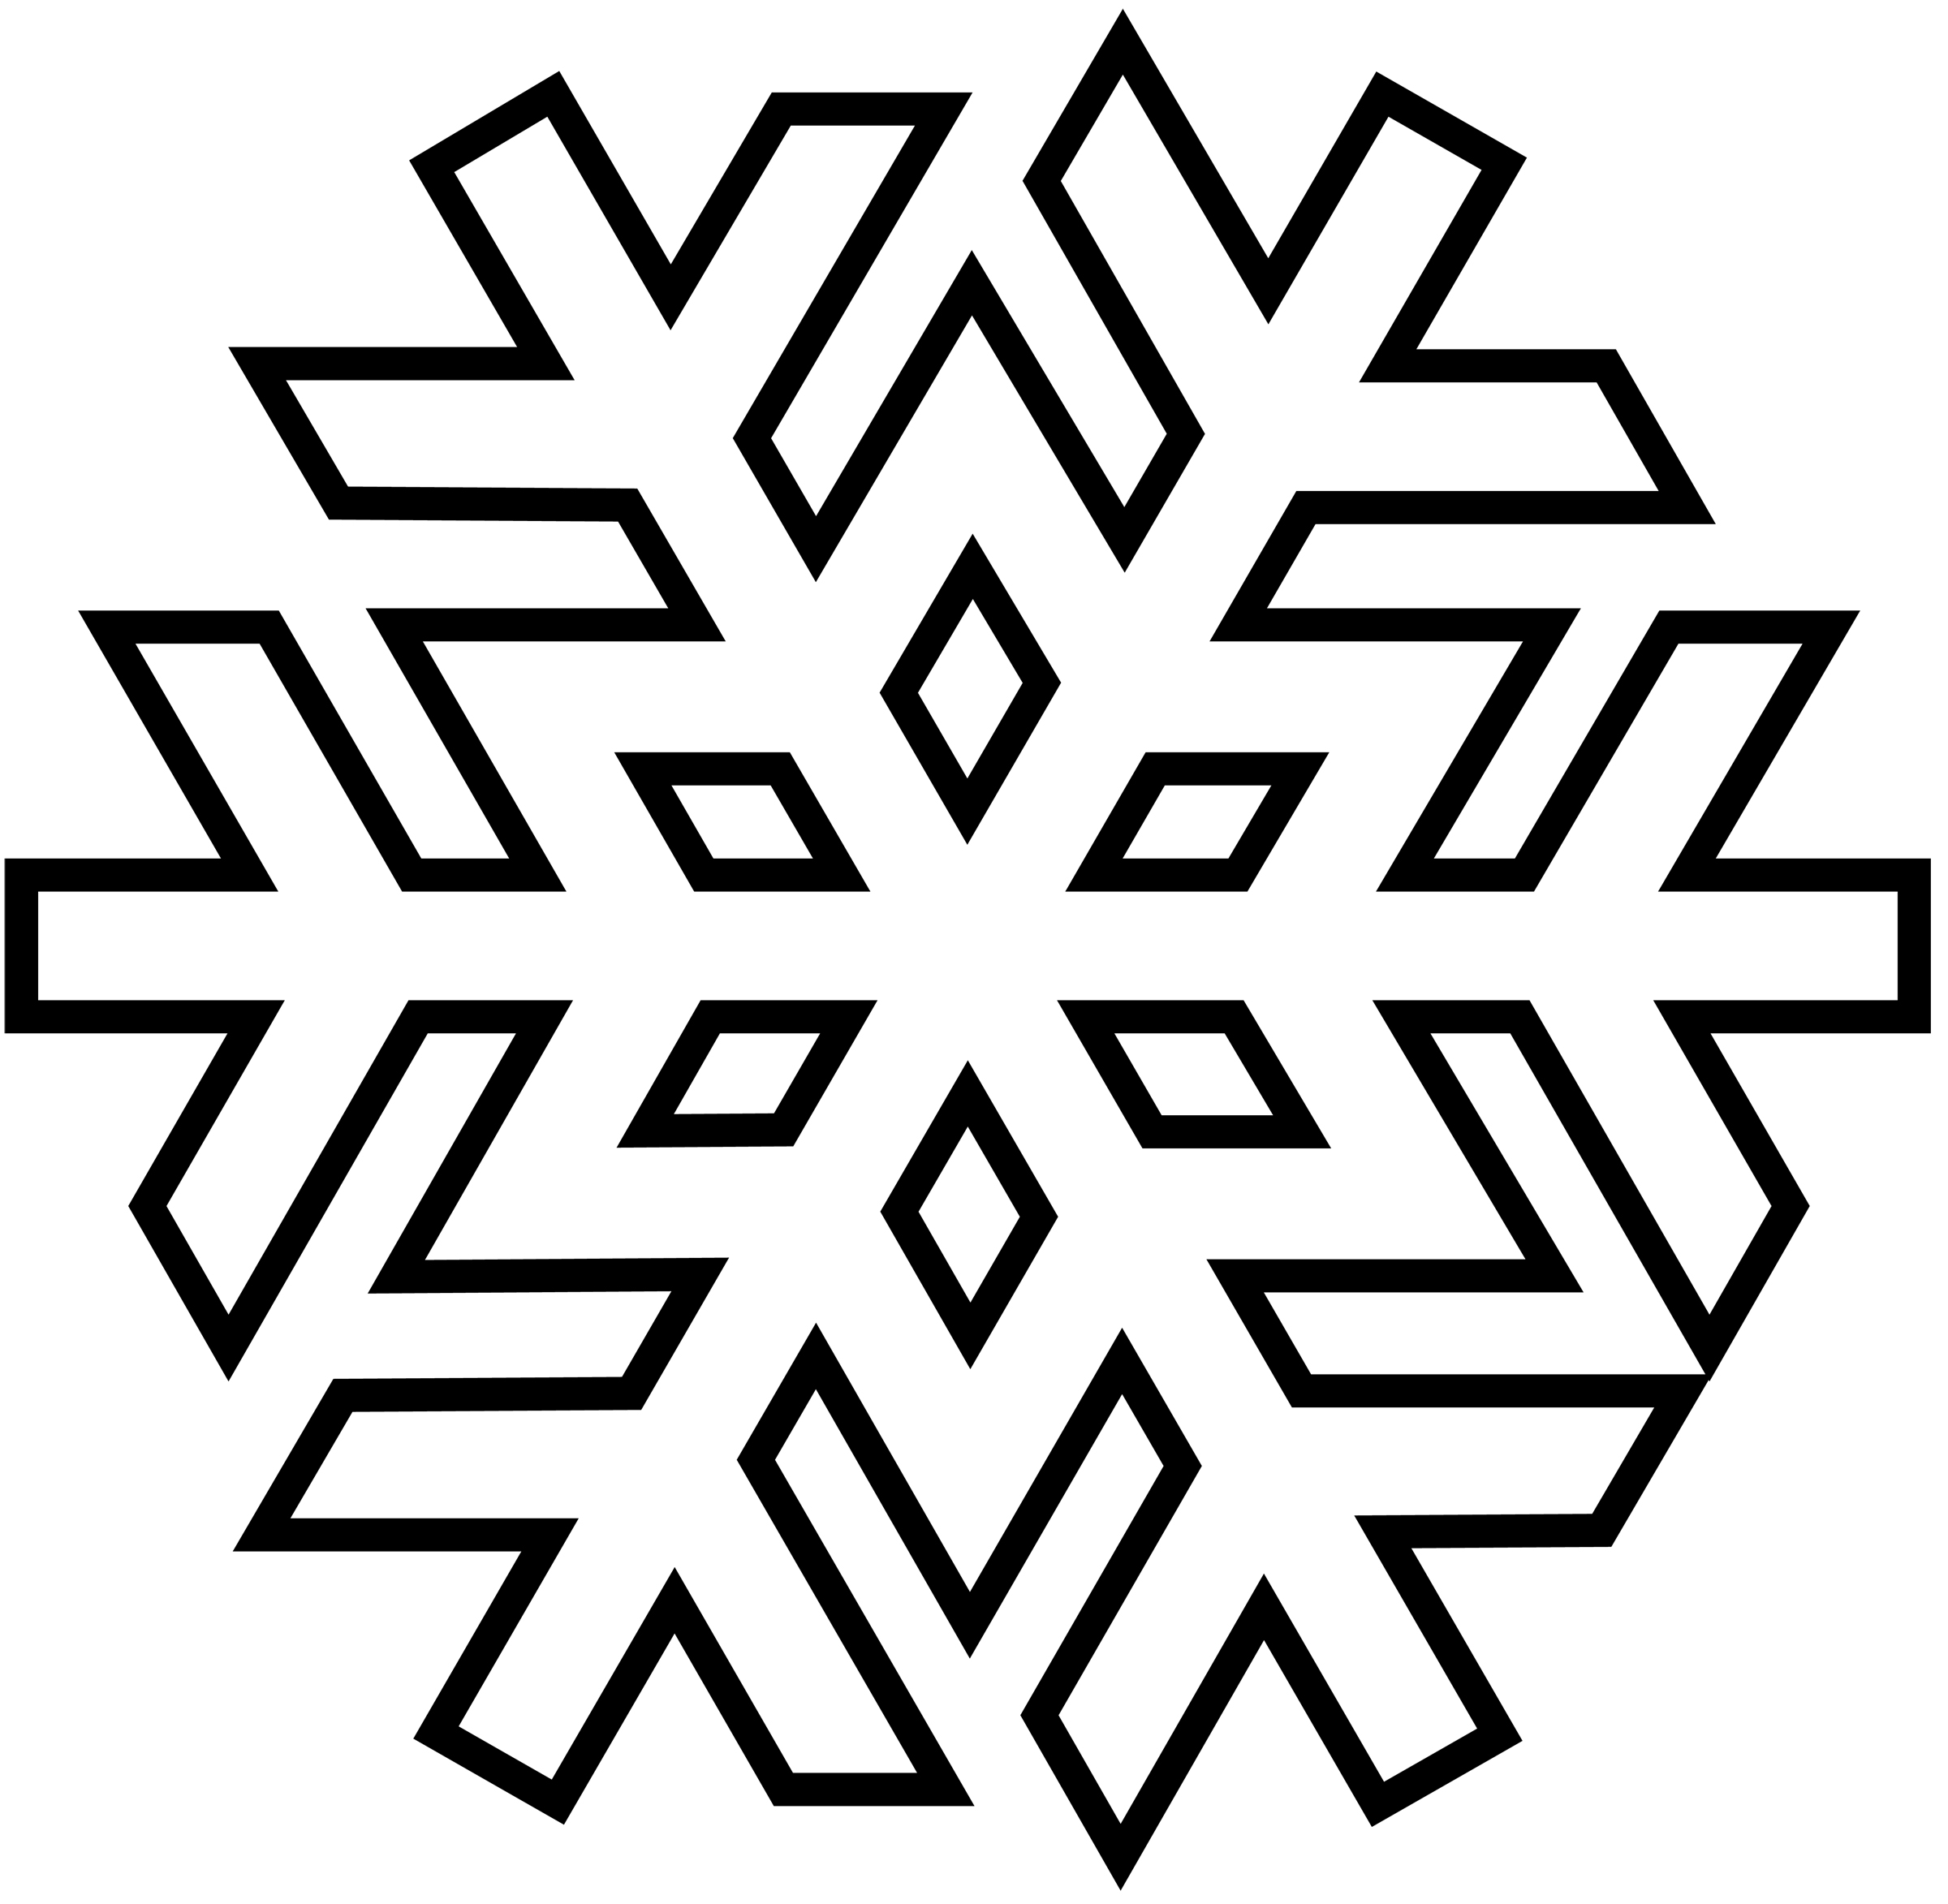 Free Snowflake Drawing Download Free Snowflake Drawing png images